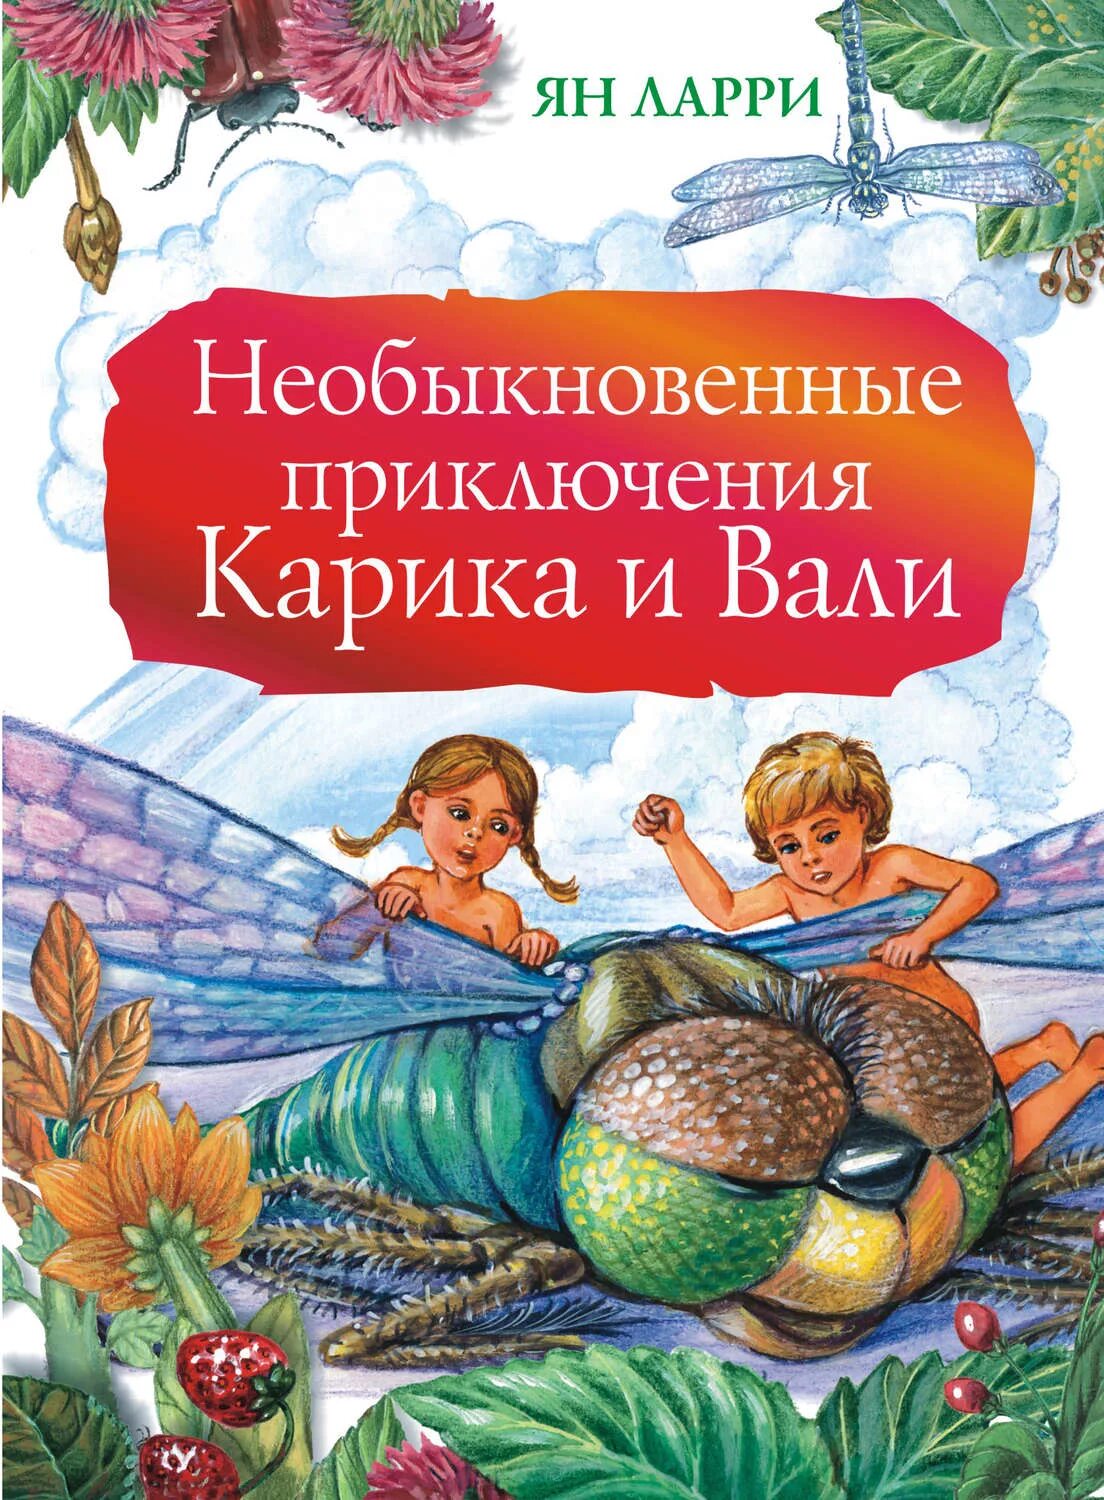 Ytj,sryjdtyyst ghbrk.xtybz ufhbrf b DFKB ZY kfhhb. Детская книга приключения Карика и Вали.